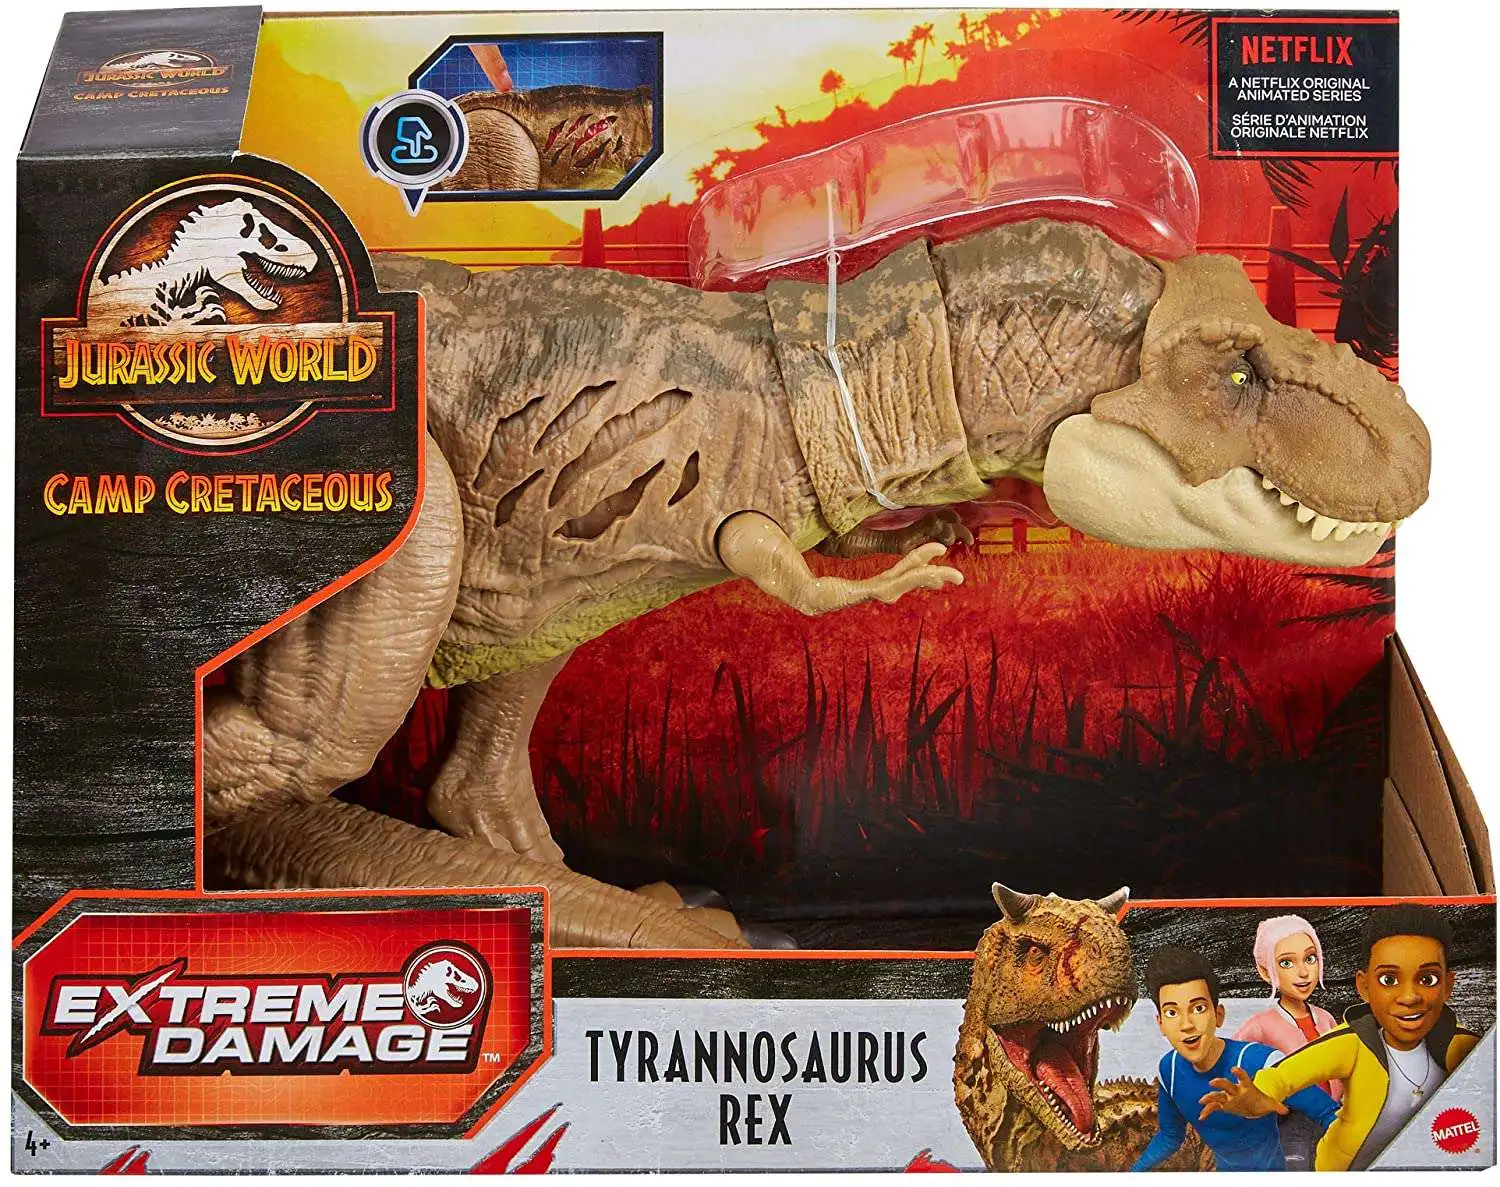 Jurassic World Camp Cretaceous Extreme Damage Tyrannosaurus Rex Exclusive  Action Figure [Netflix Version]